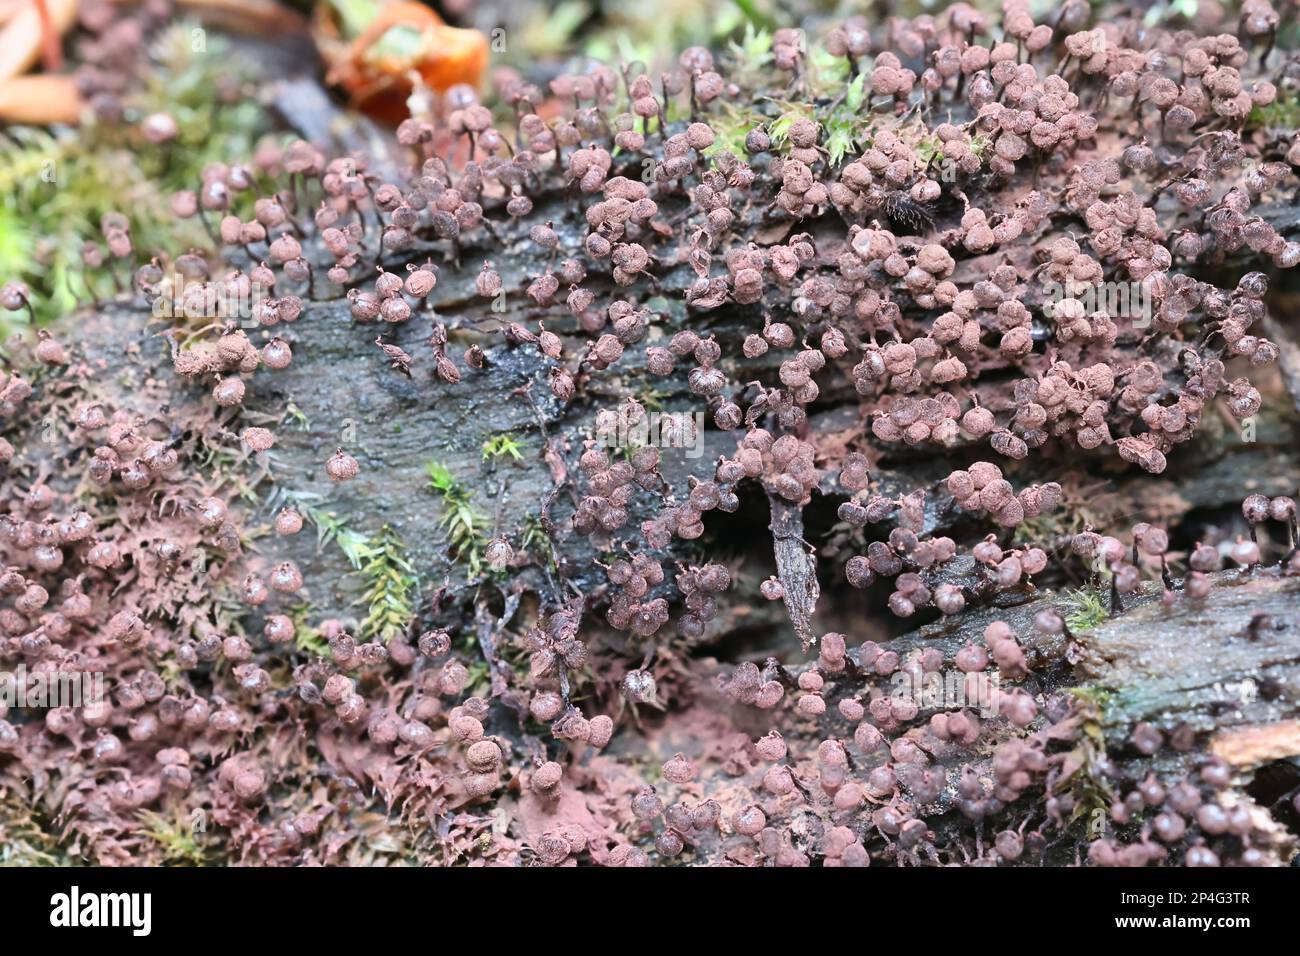 Cribraria cancellata, also known as Dictydium cancellatum, slime mold from Finland, no common English name Stock Photo